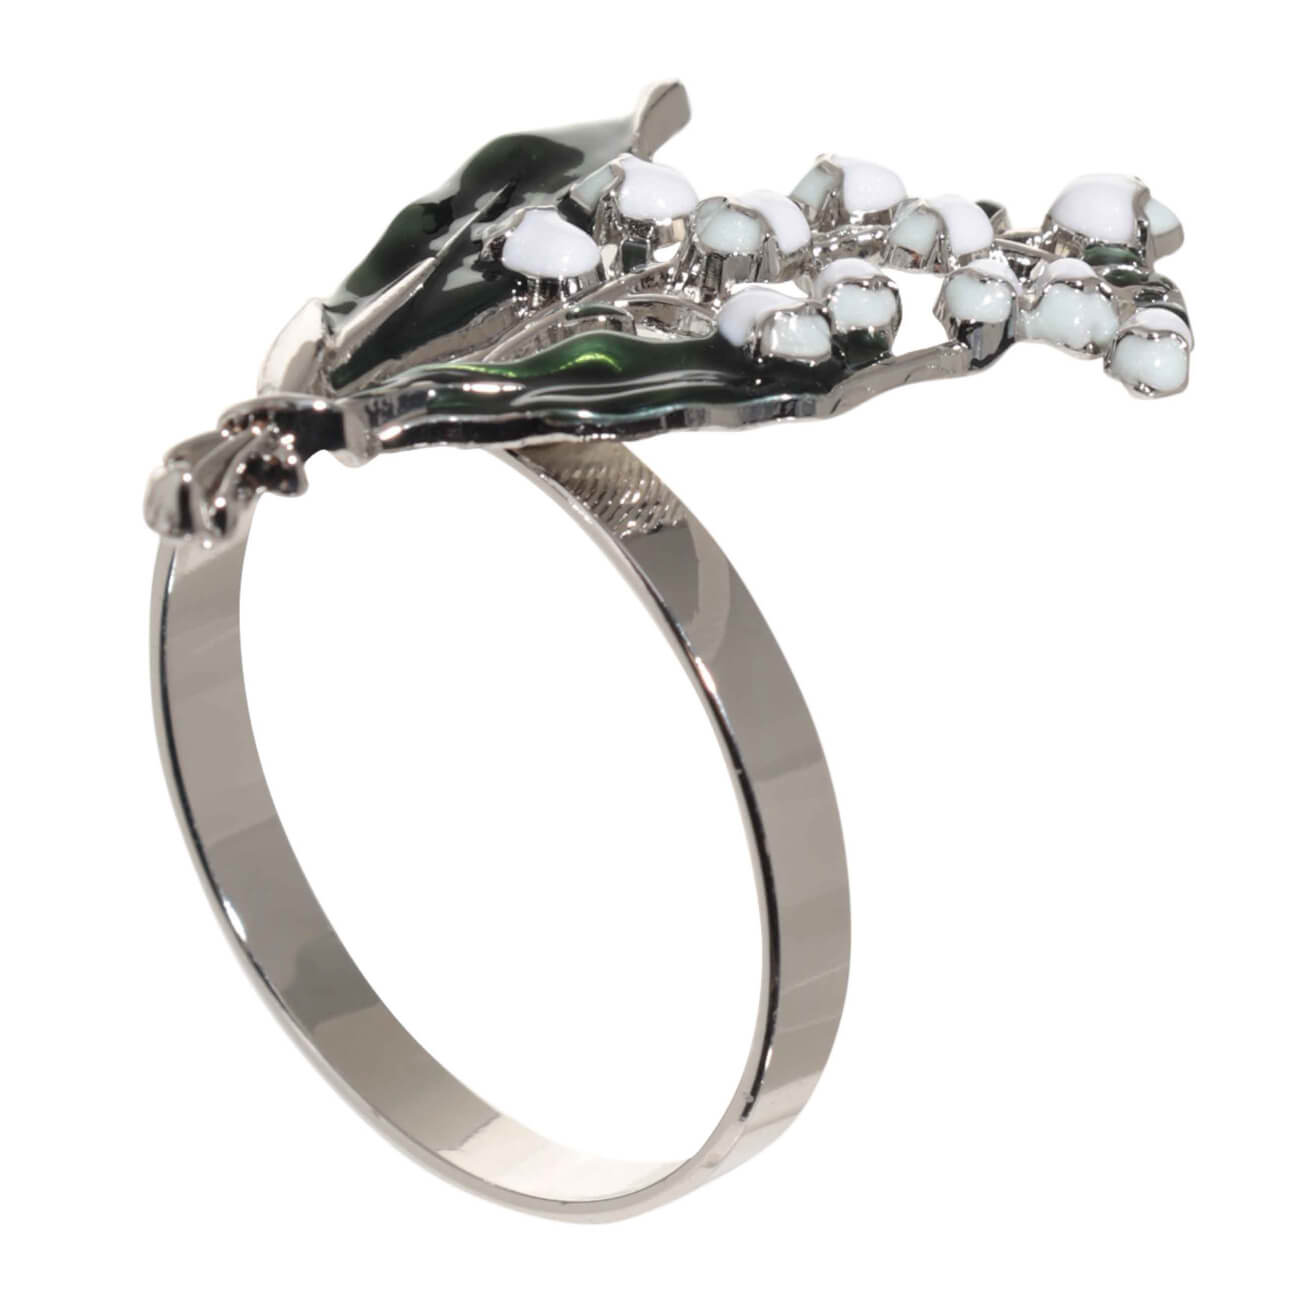 Кольцо для салфеток, 5 см, металл, зелено-серебристое, Ландыш с листьями, May-lily кольцо заводное yugana f 6056 6 мм 12 кг 10 шт